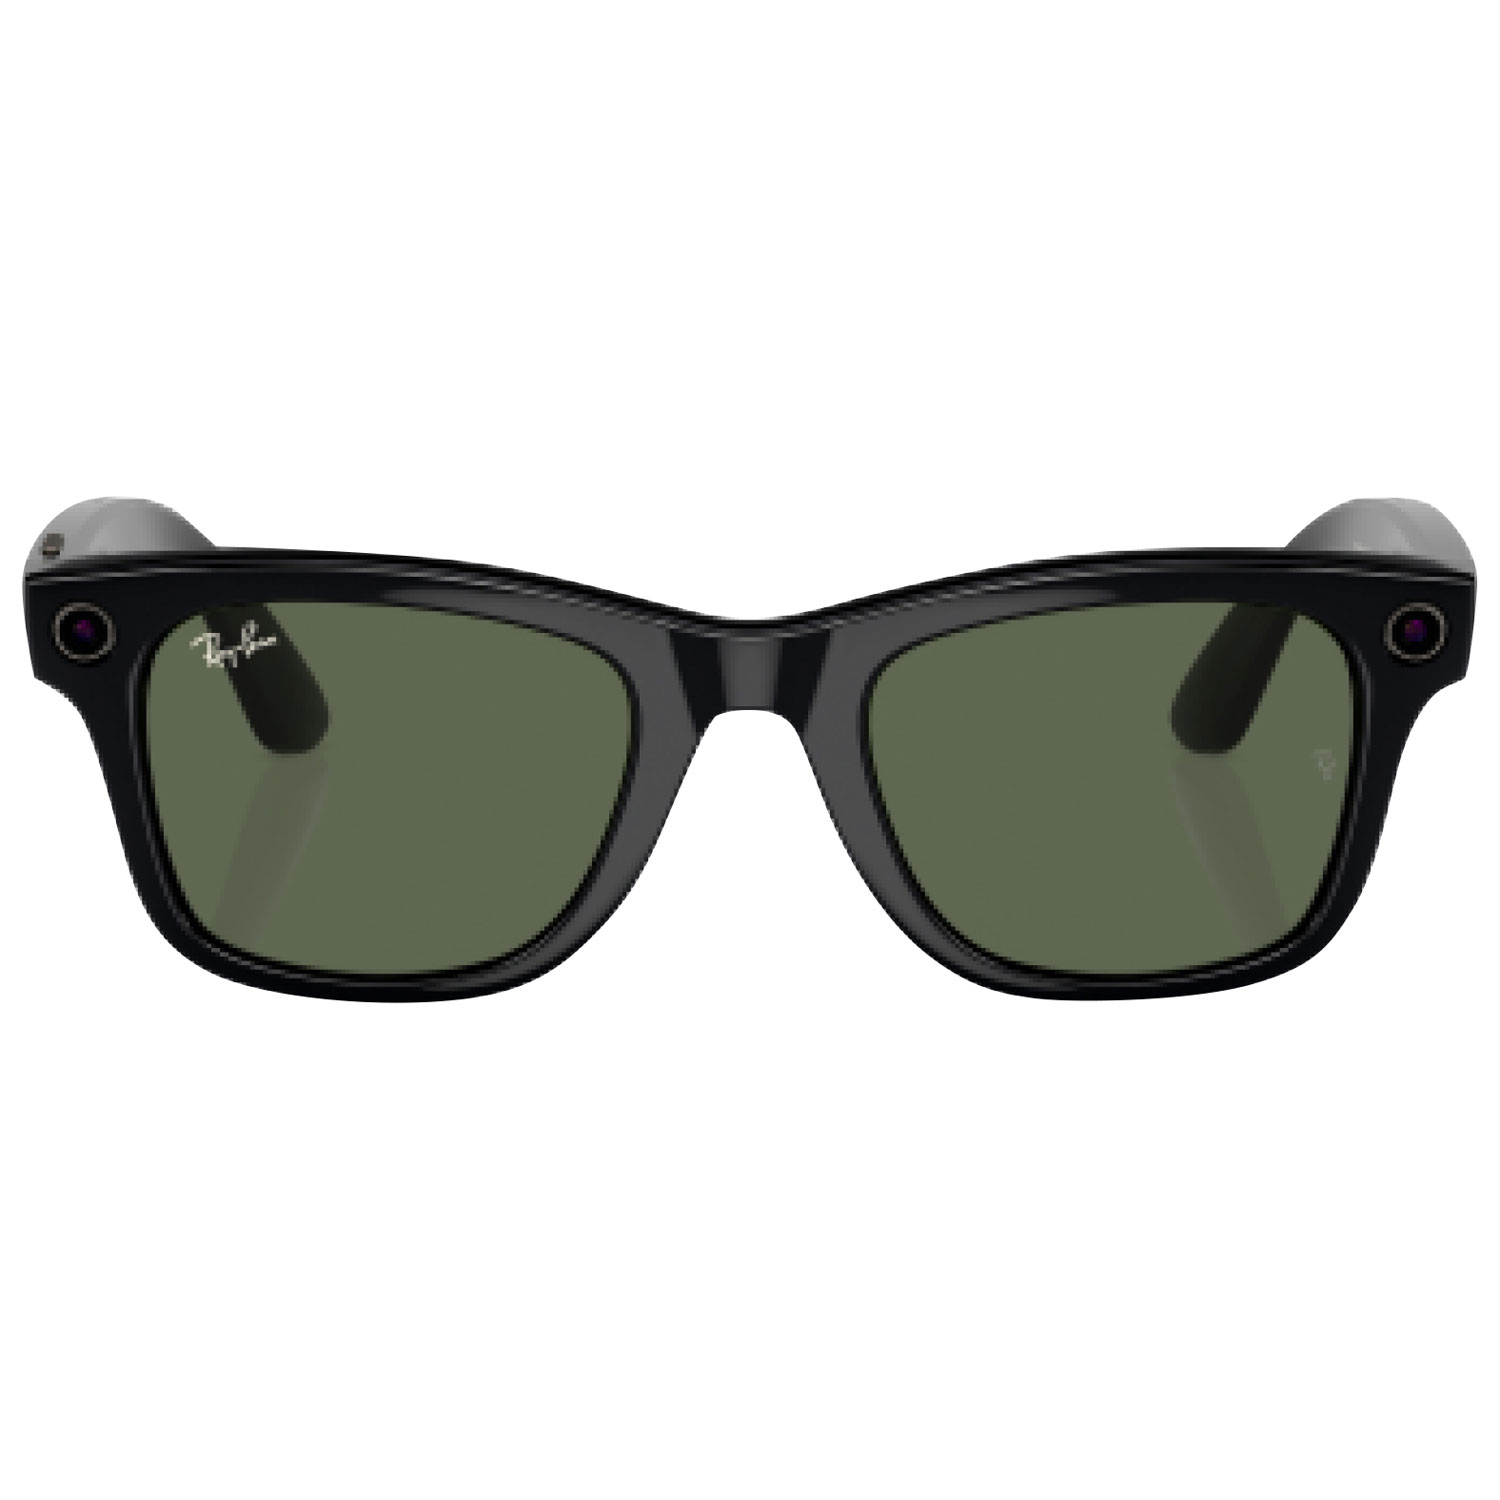 Ray-Ban | Meta Wayfarer Smart Glasses with AI, Photo, Video, Audio & Messaging - Shiny Black/G-15 Green - Large